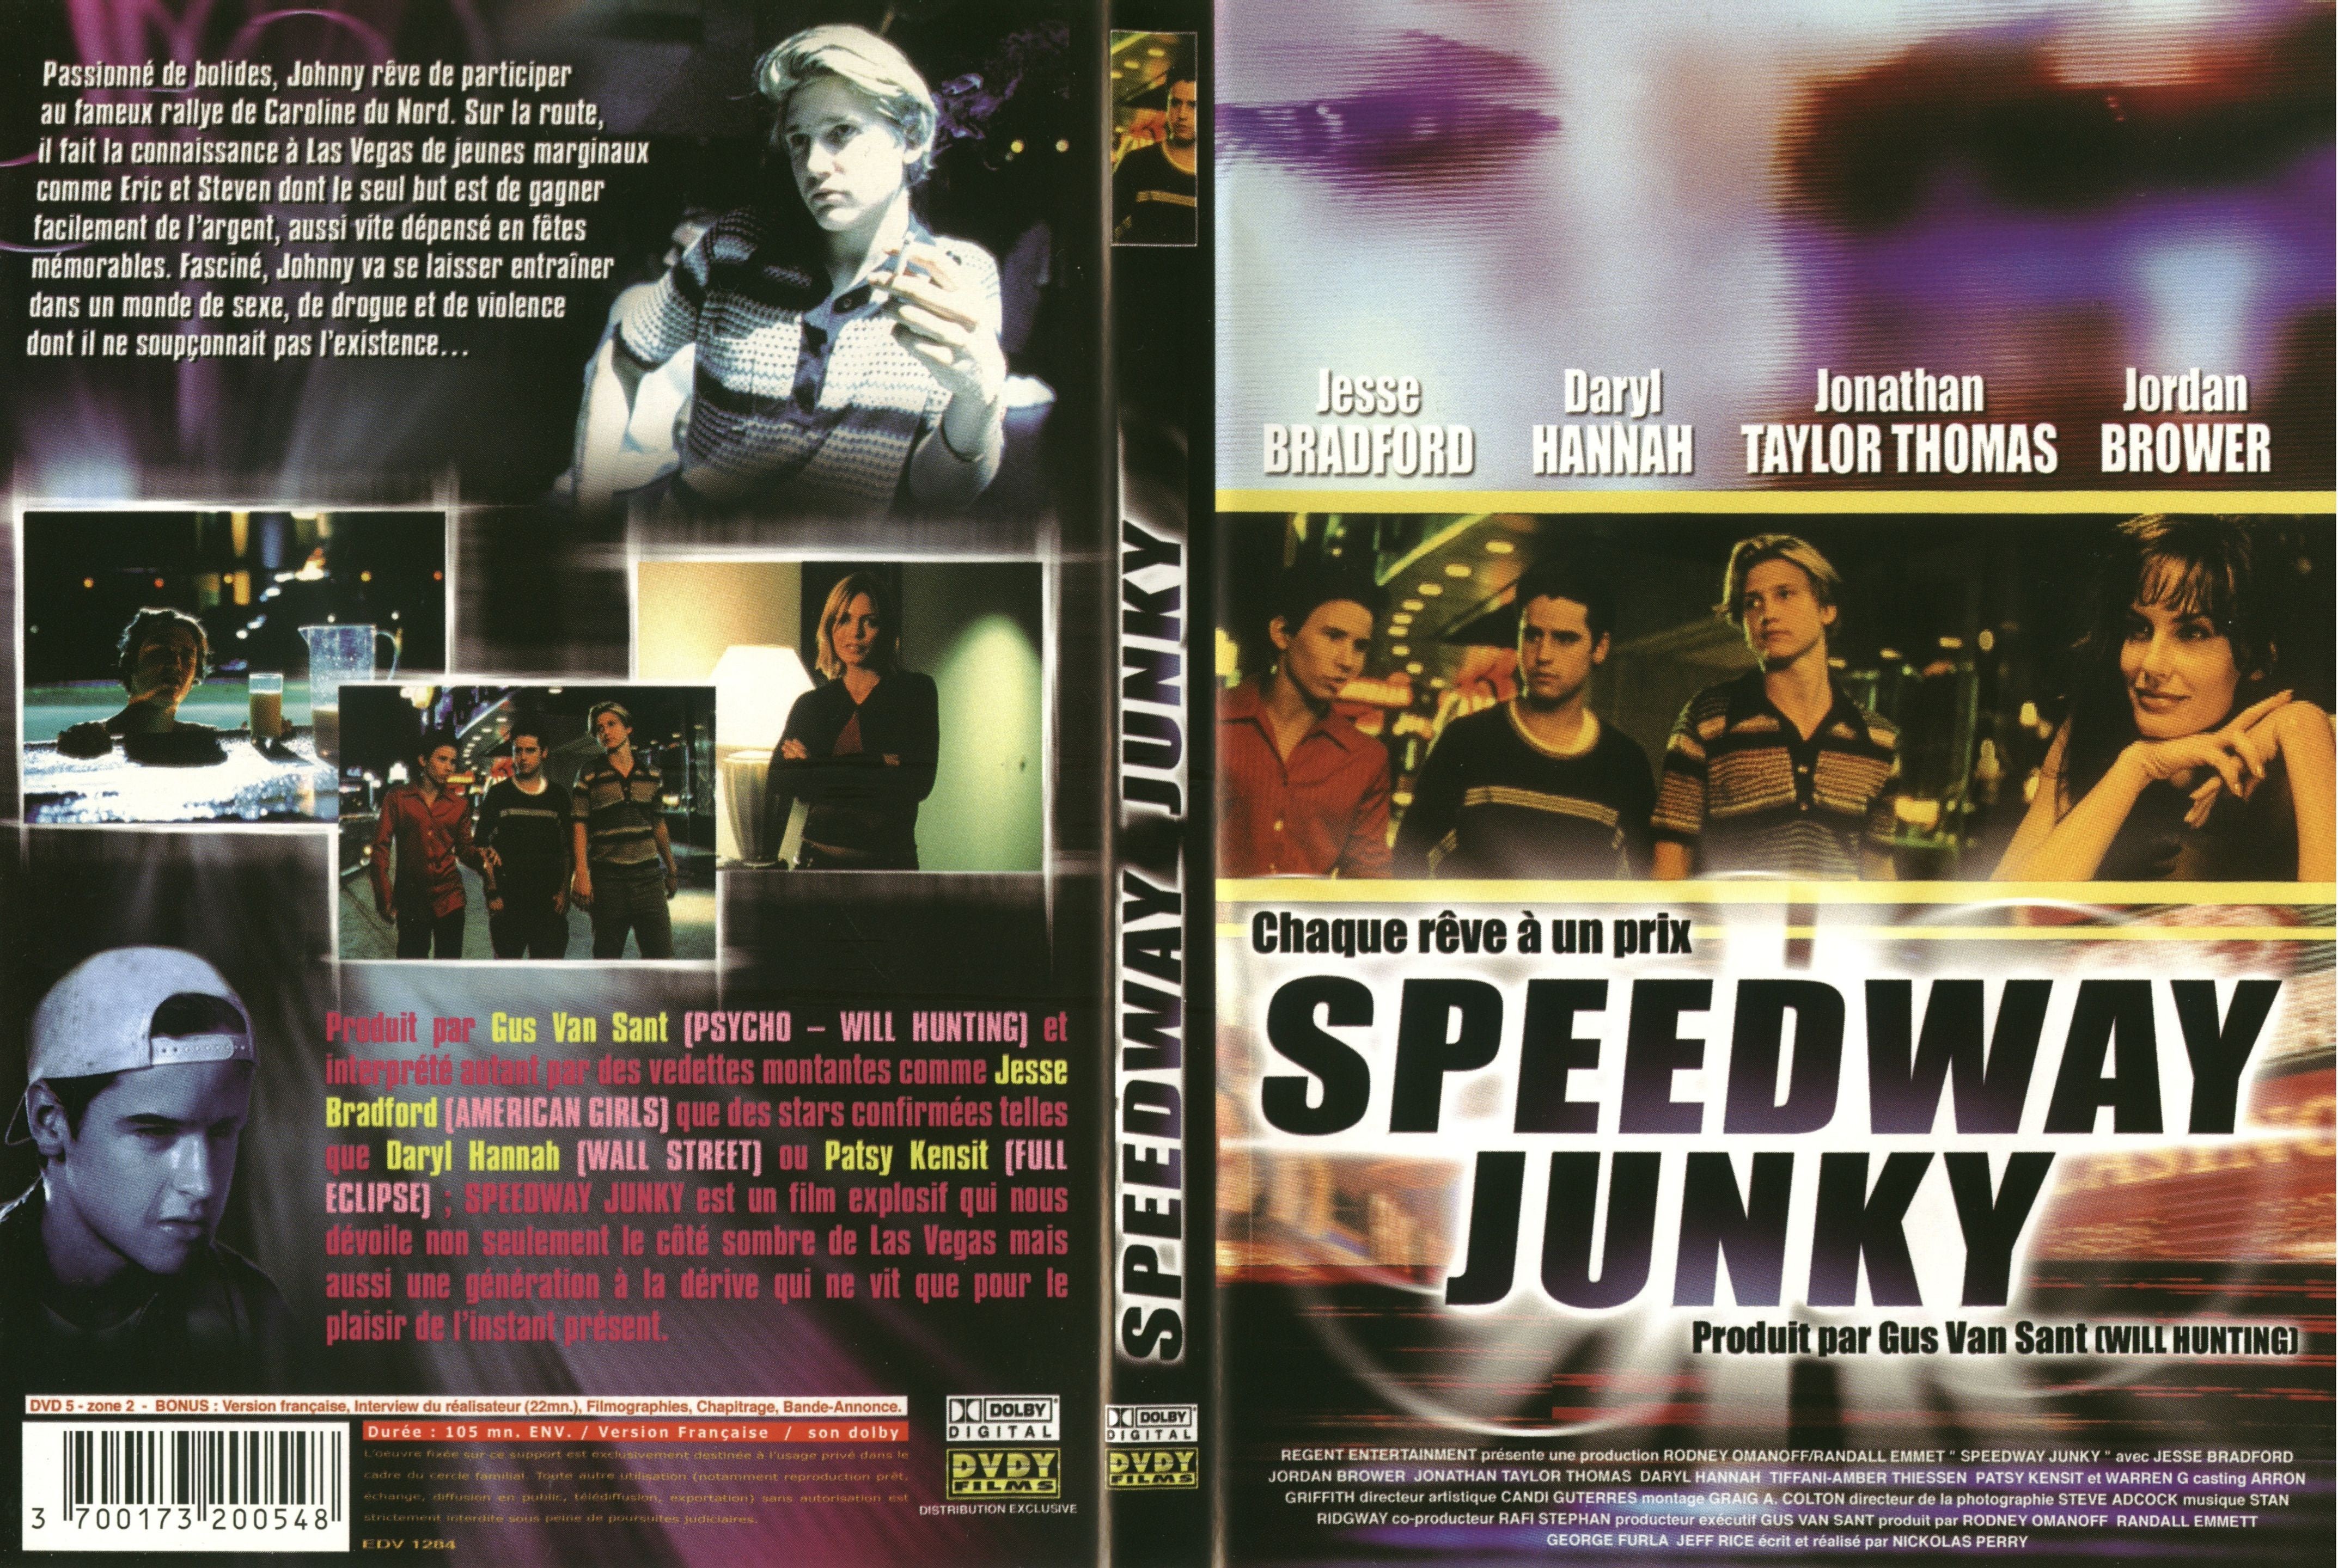 Jaquette DVD Speedway junky